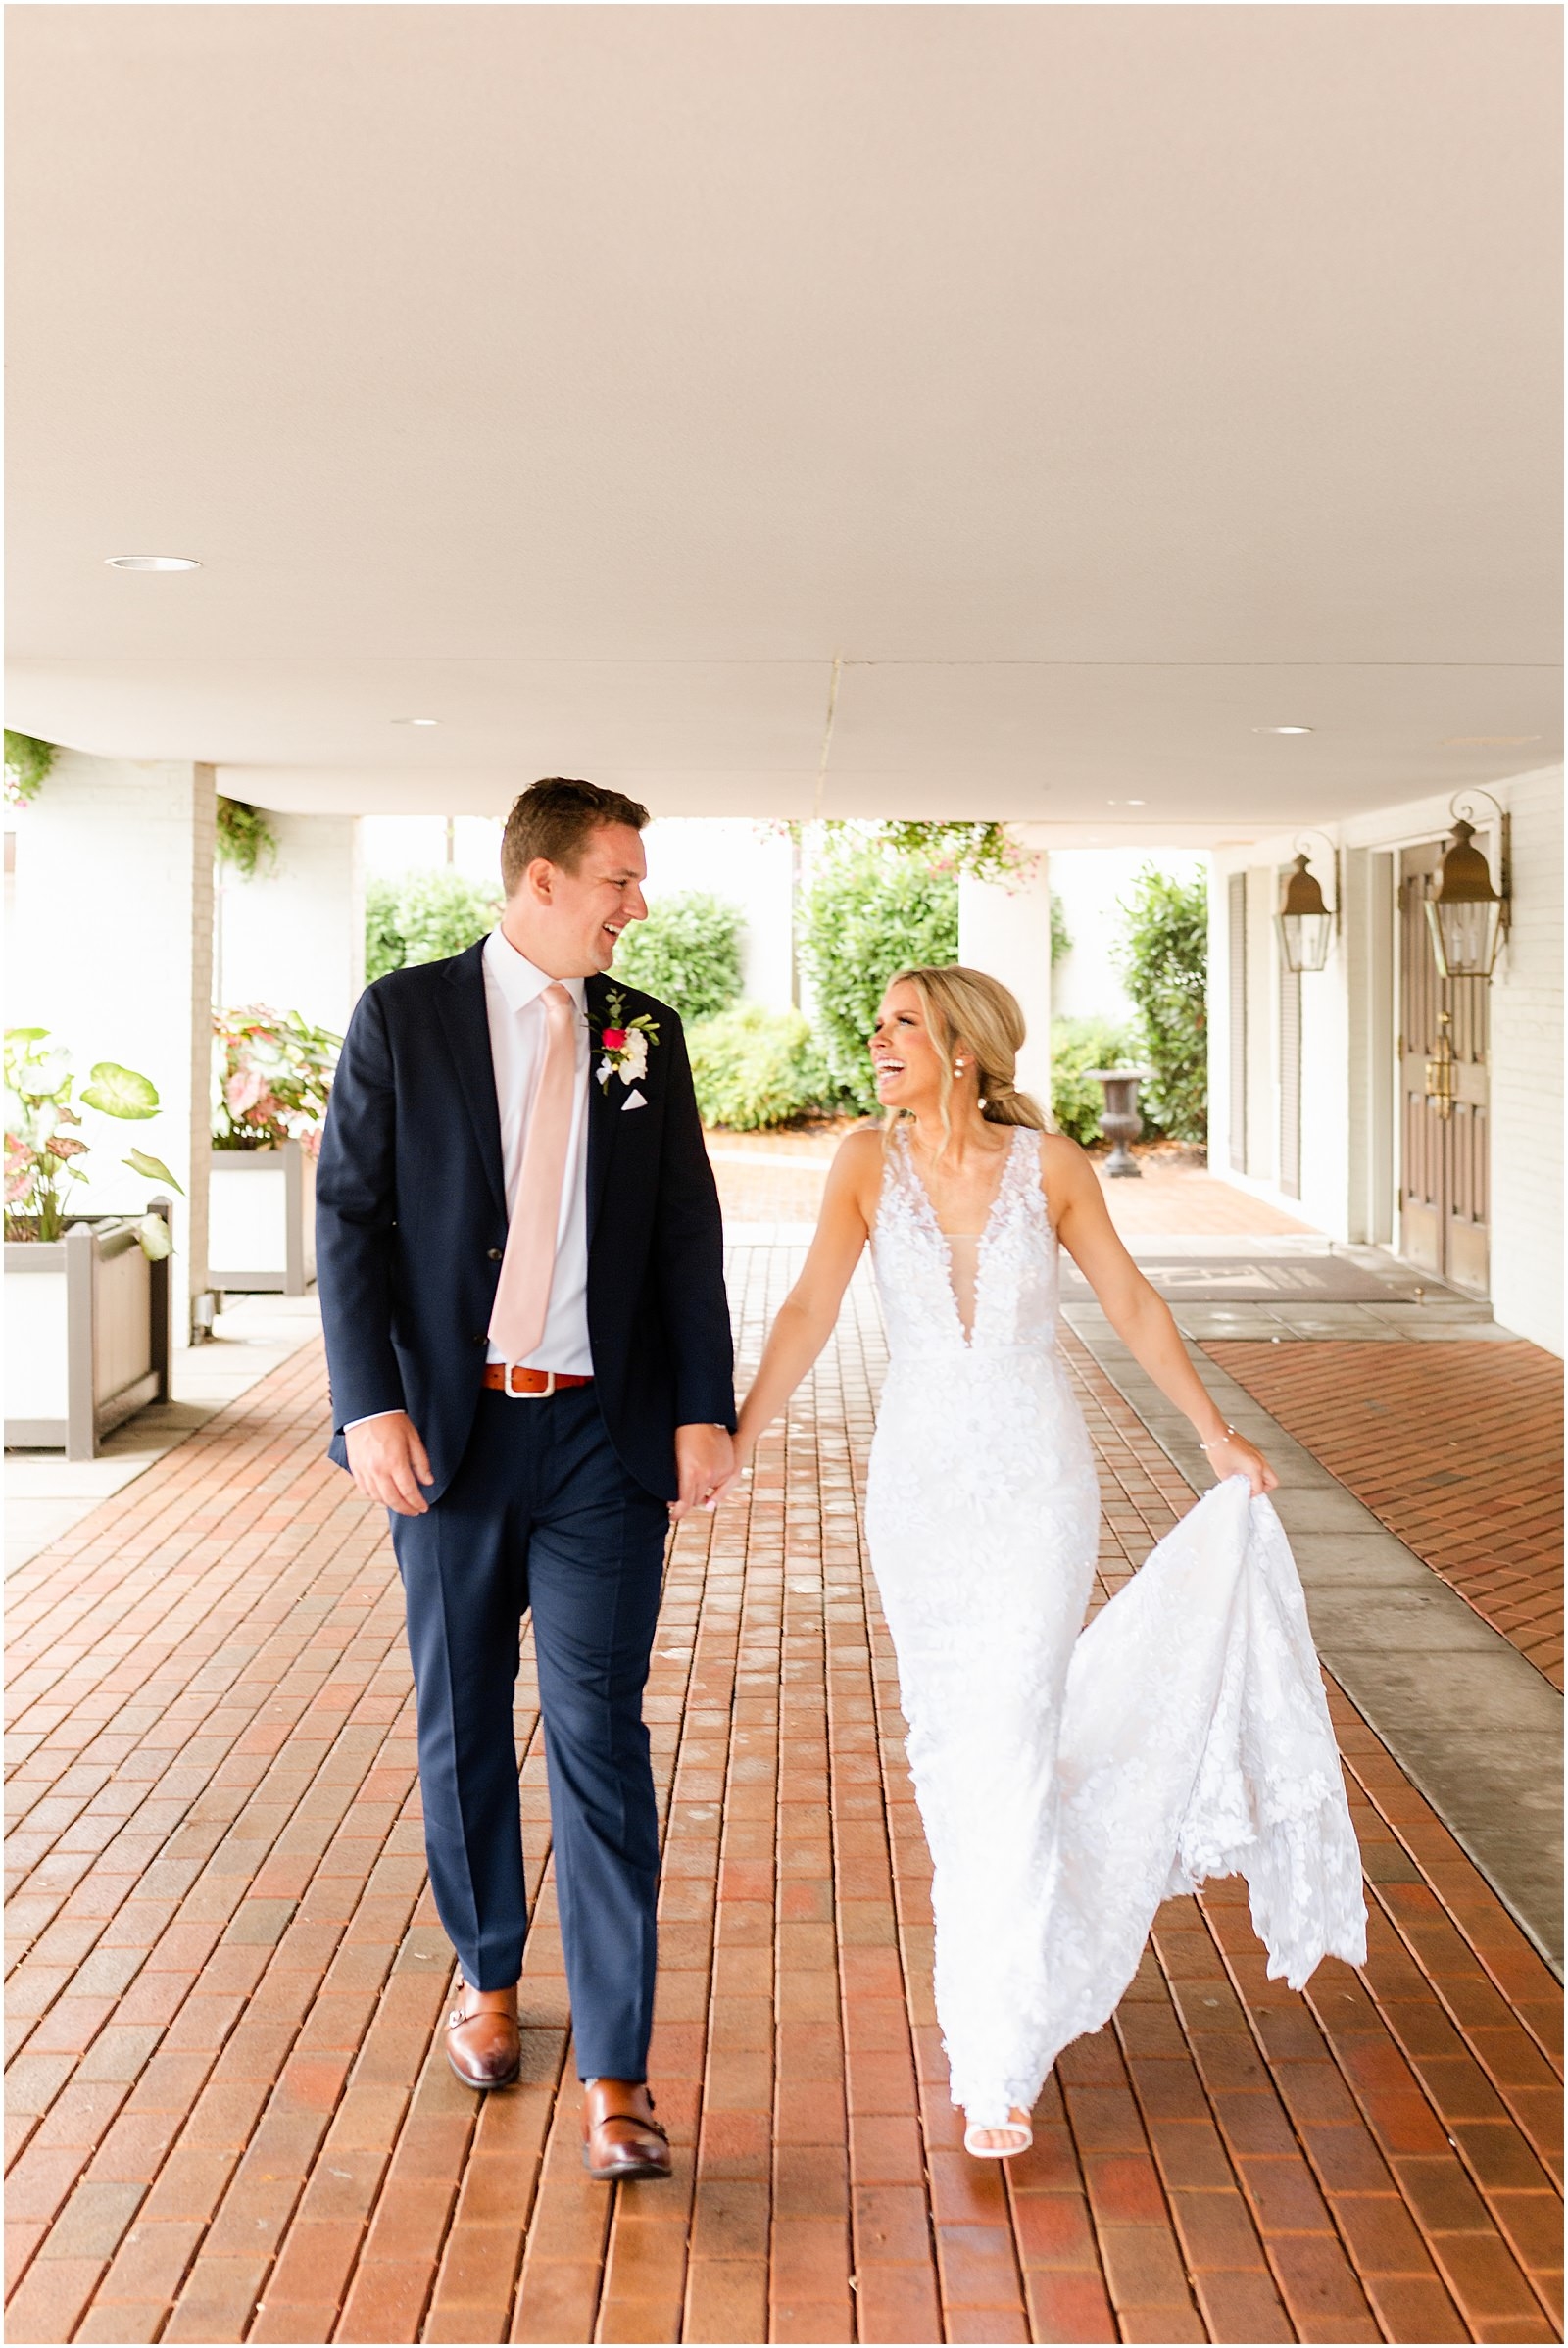 An Evansville Country Club Wedding | Madison and Christiaan | Bret and Brandie | Evansville Photographers | @bretandbrandie-0169.jpg